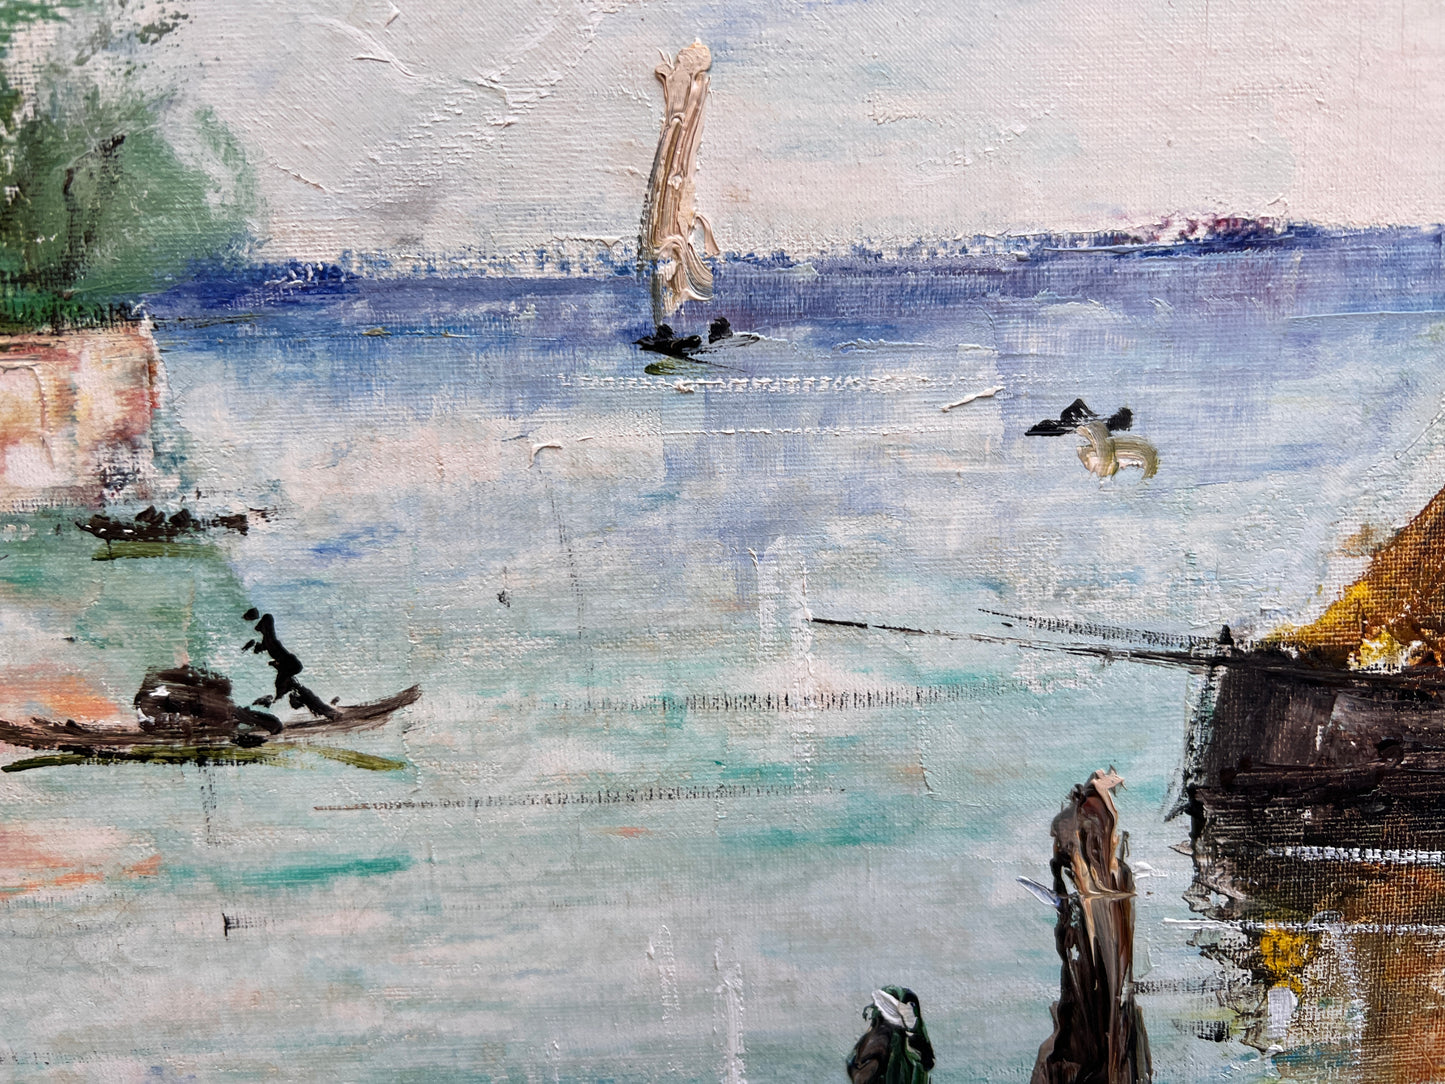 Large oil painting on canvas, cityscape, Venice, Canal View, signed Alvarez